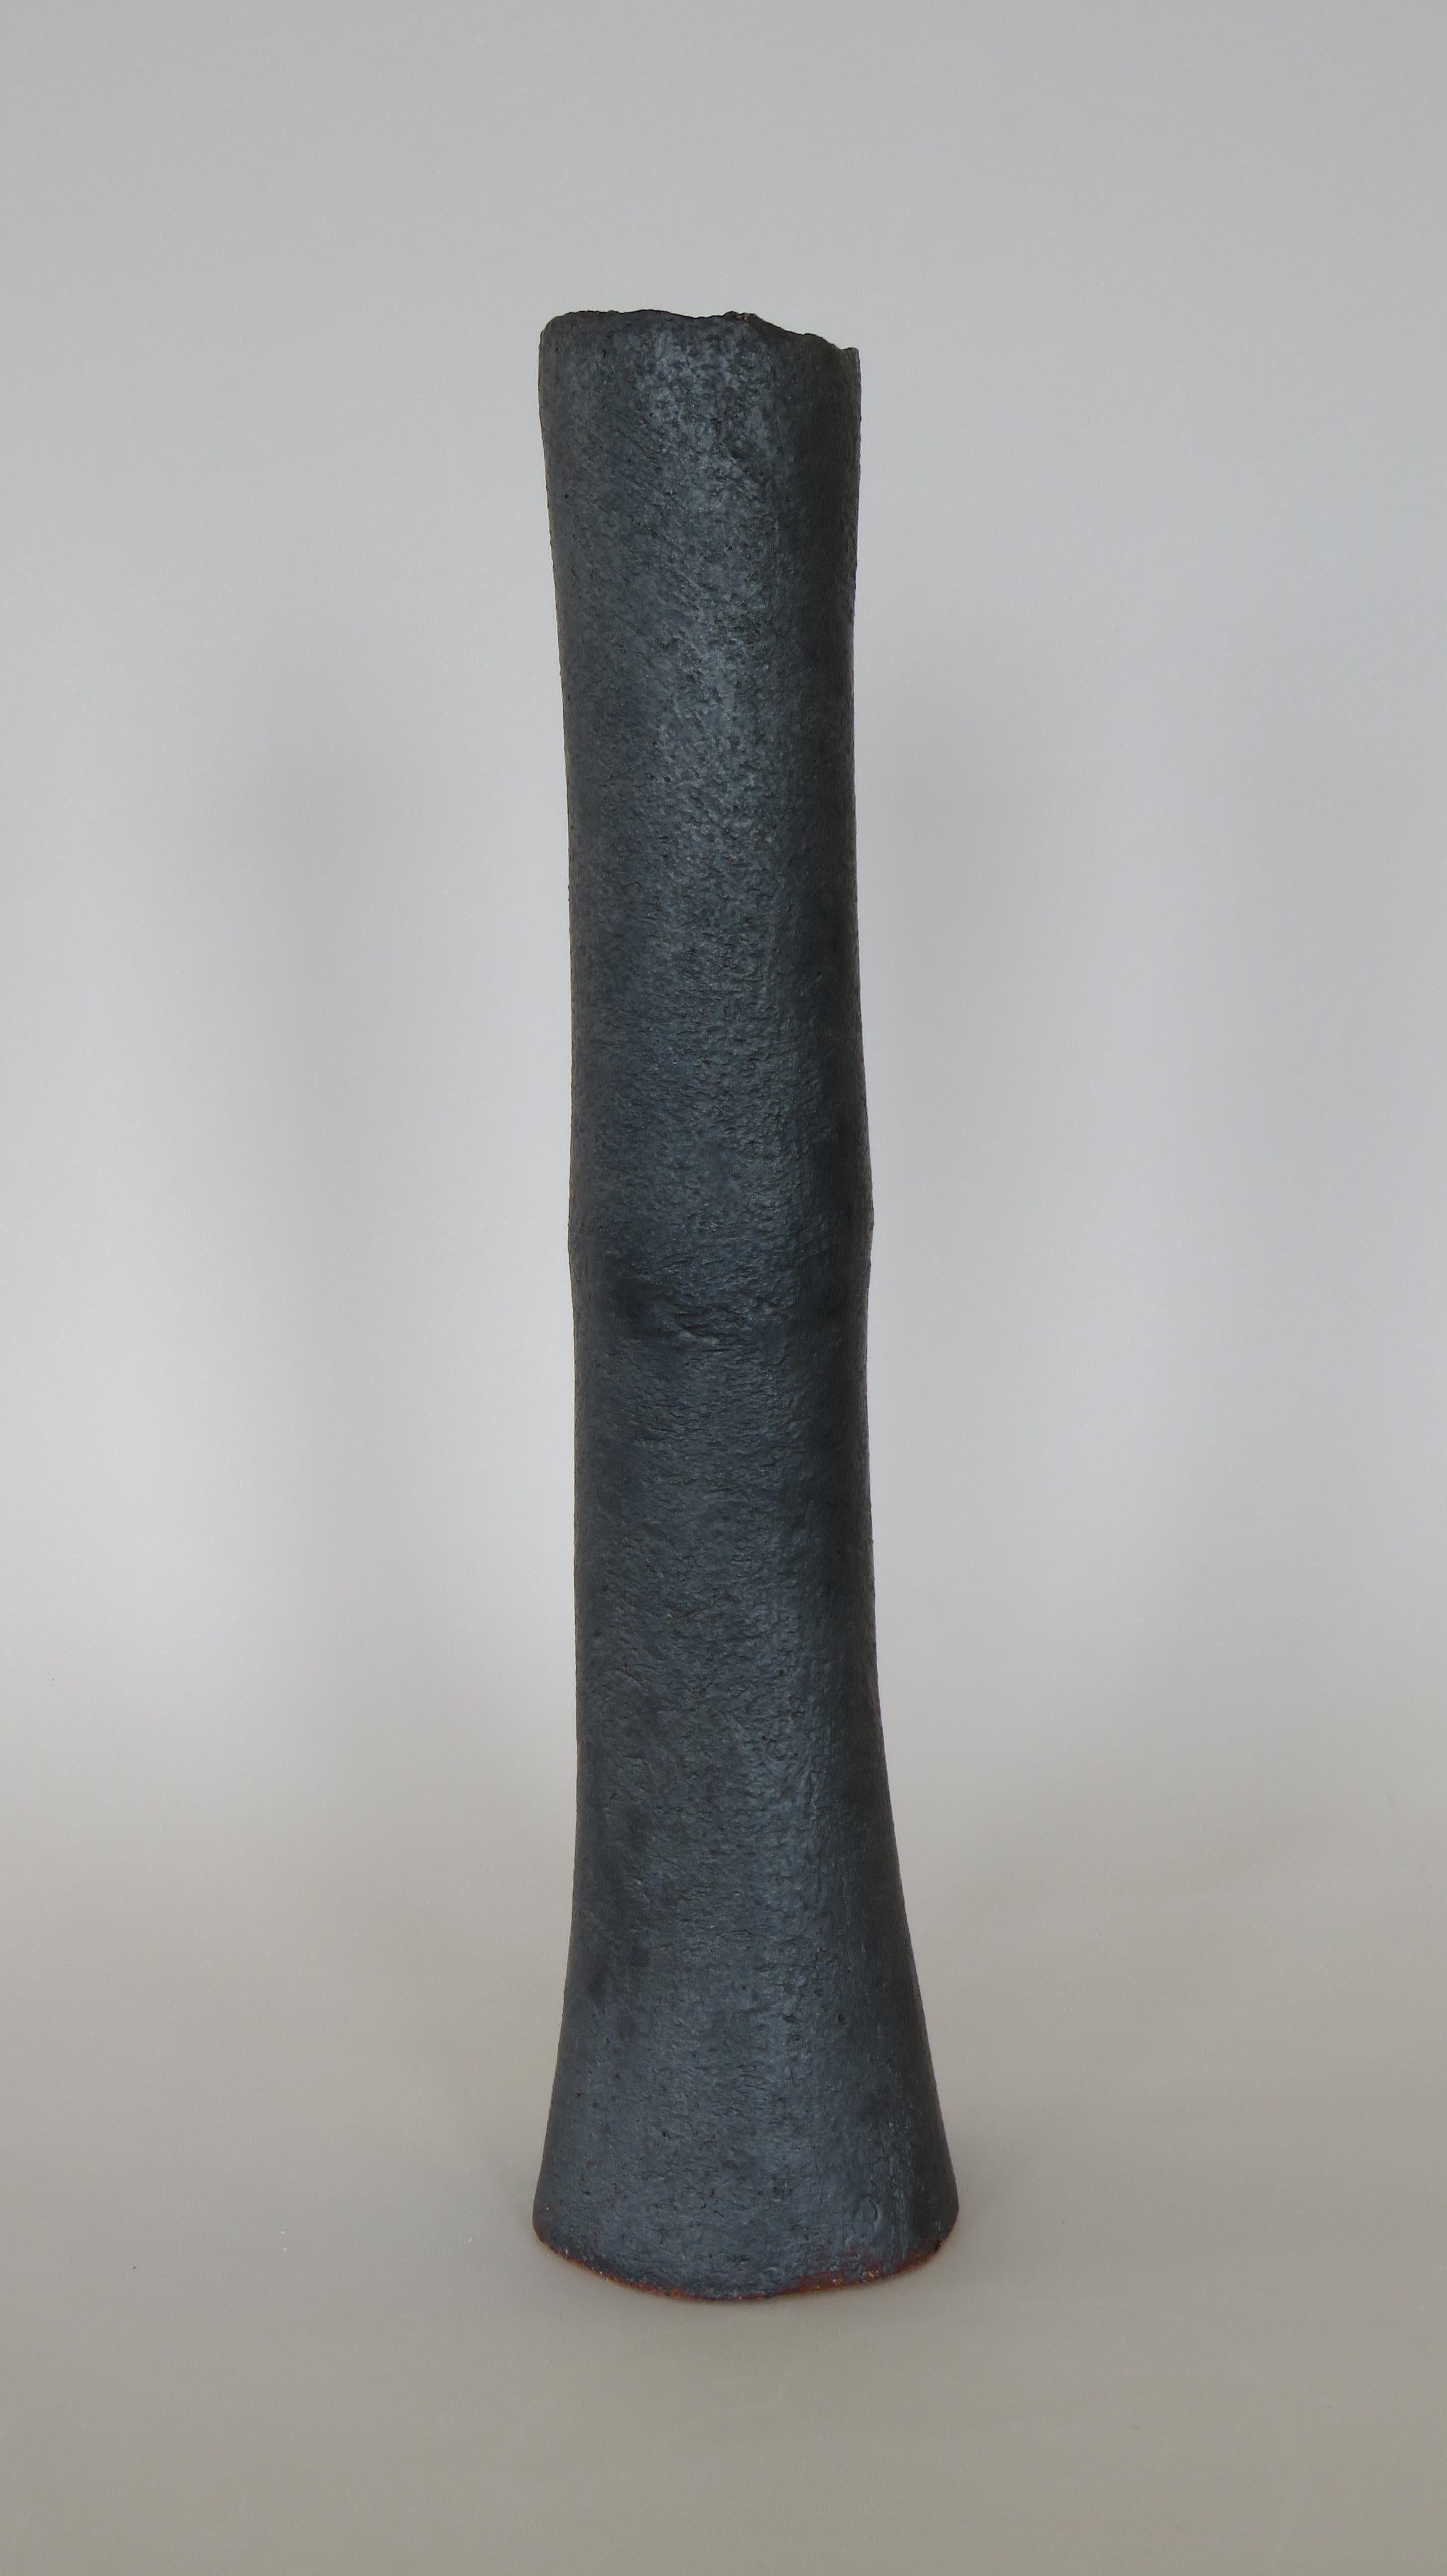 American Tall Tubular Metallic Black Stoneware Vase, Hand Built, 17.5 Inches Tall